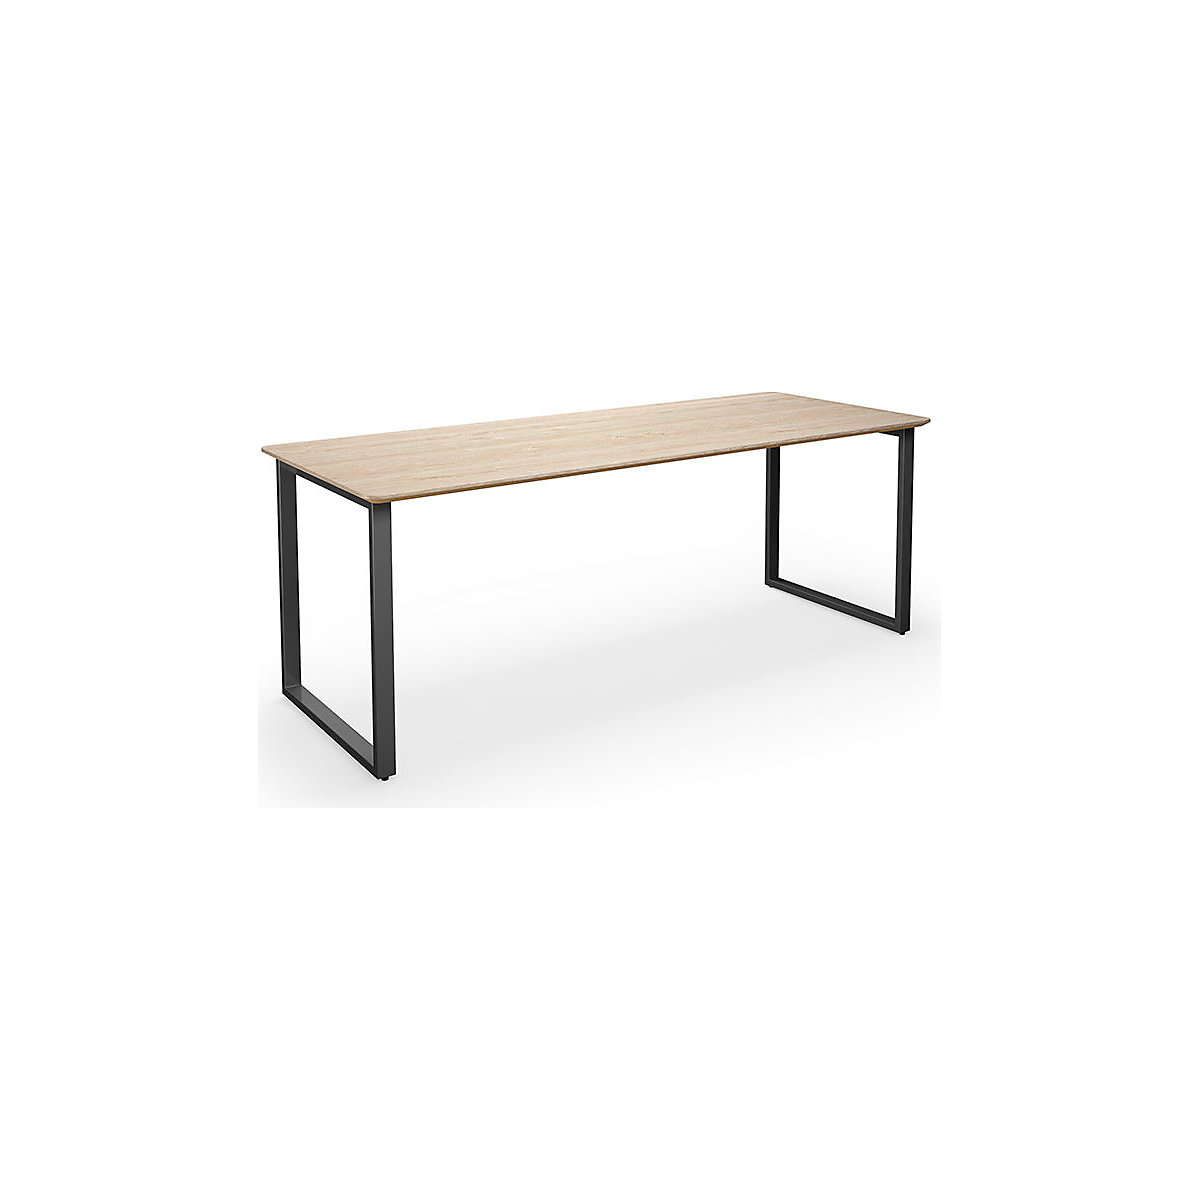 DUO-O Trend multi-purpose desk, straight tabletop, rounded corners, WxD 2000 x 800 mm, oak, black-2